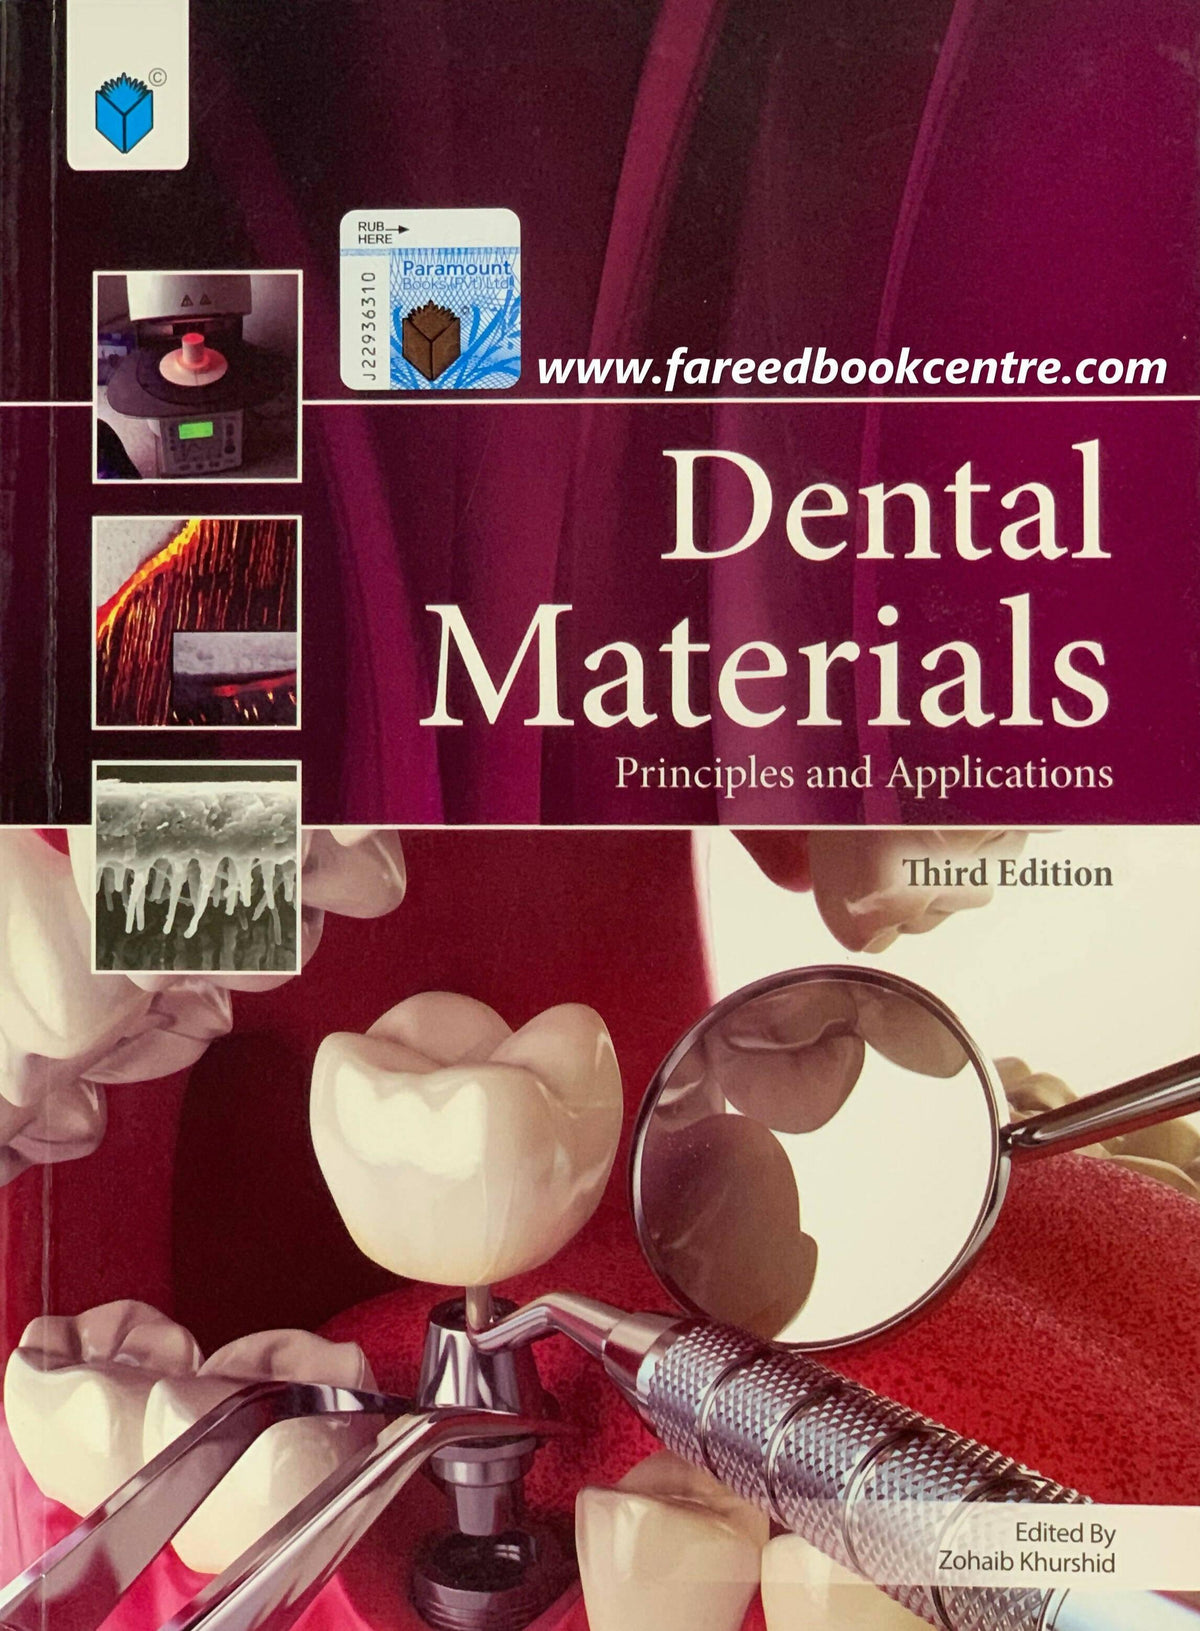 Dental Materials 3rd Edition By Zohaib Khurshid - ValueBox